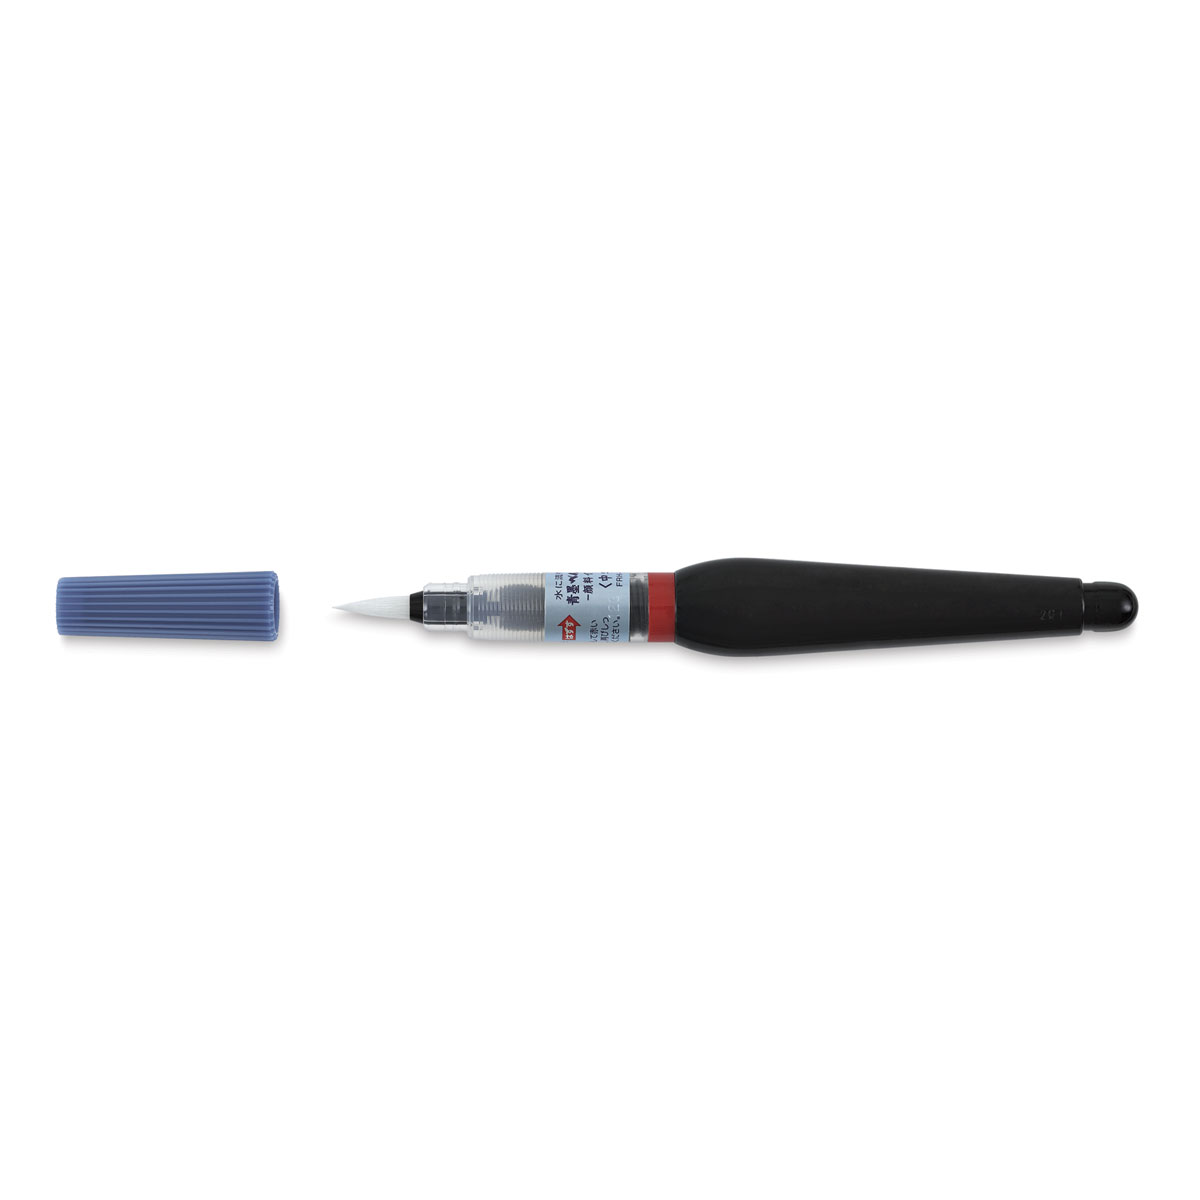 Pentel Color Brush Fine Tip Pen, Black Pigment - Artist & Craftsman Supply